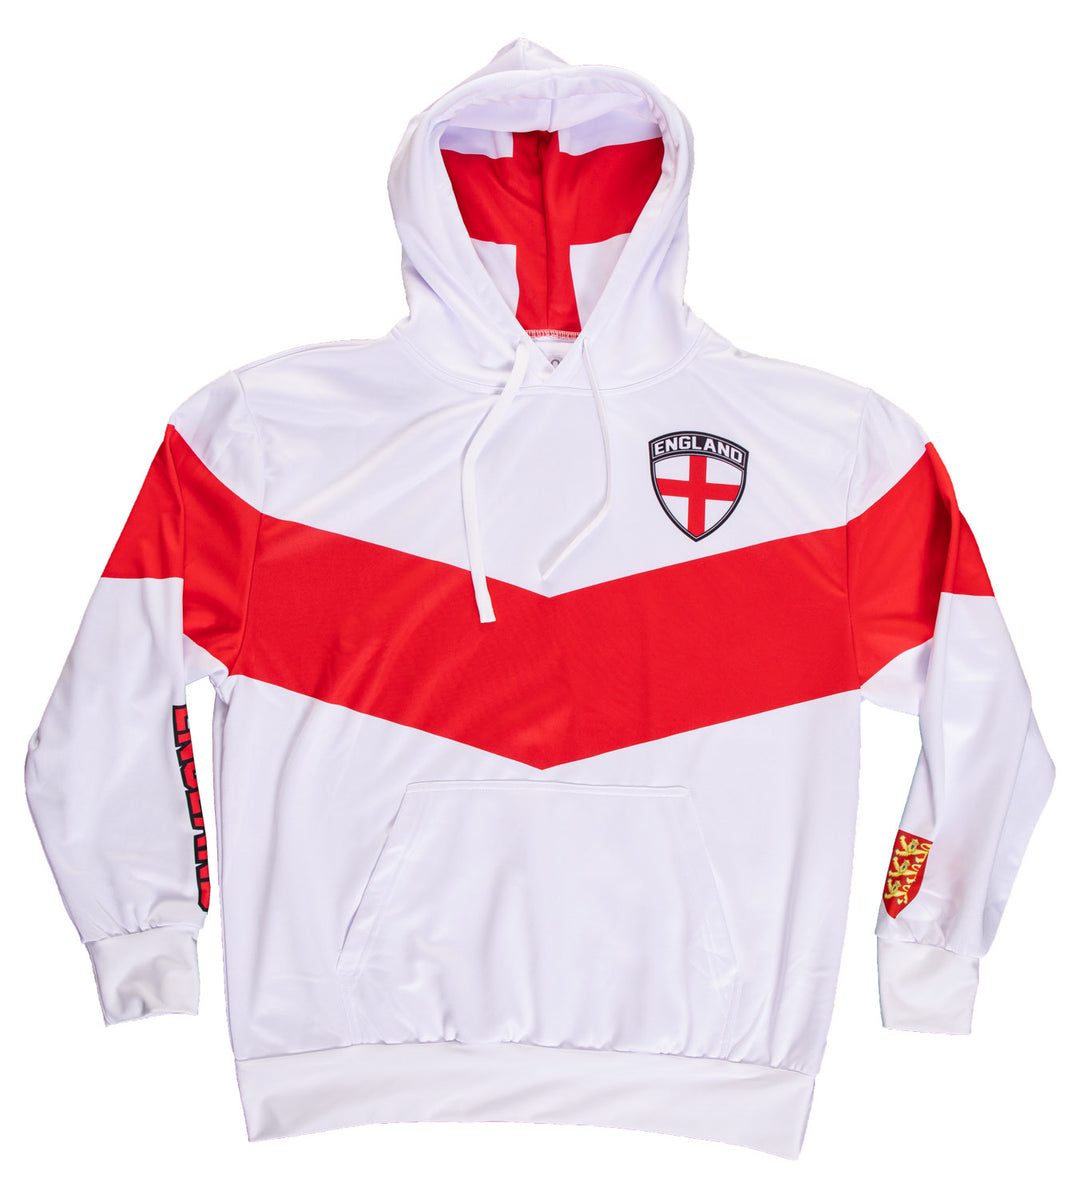 England World Soccer Sublimated Hooded Sweatshirt